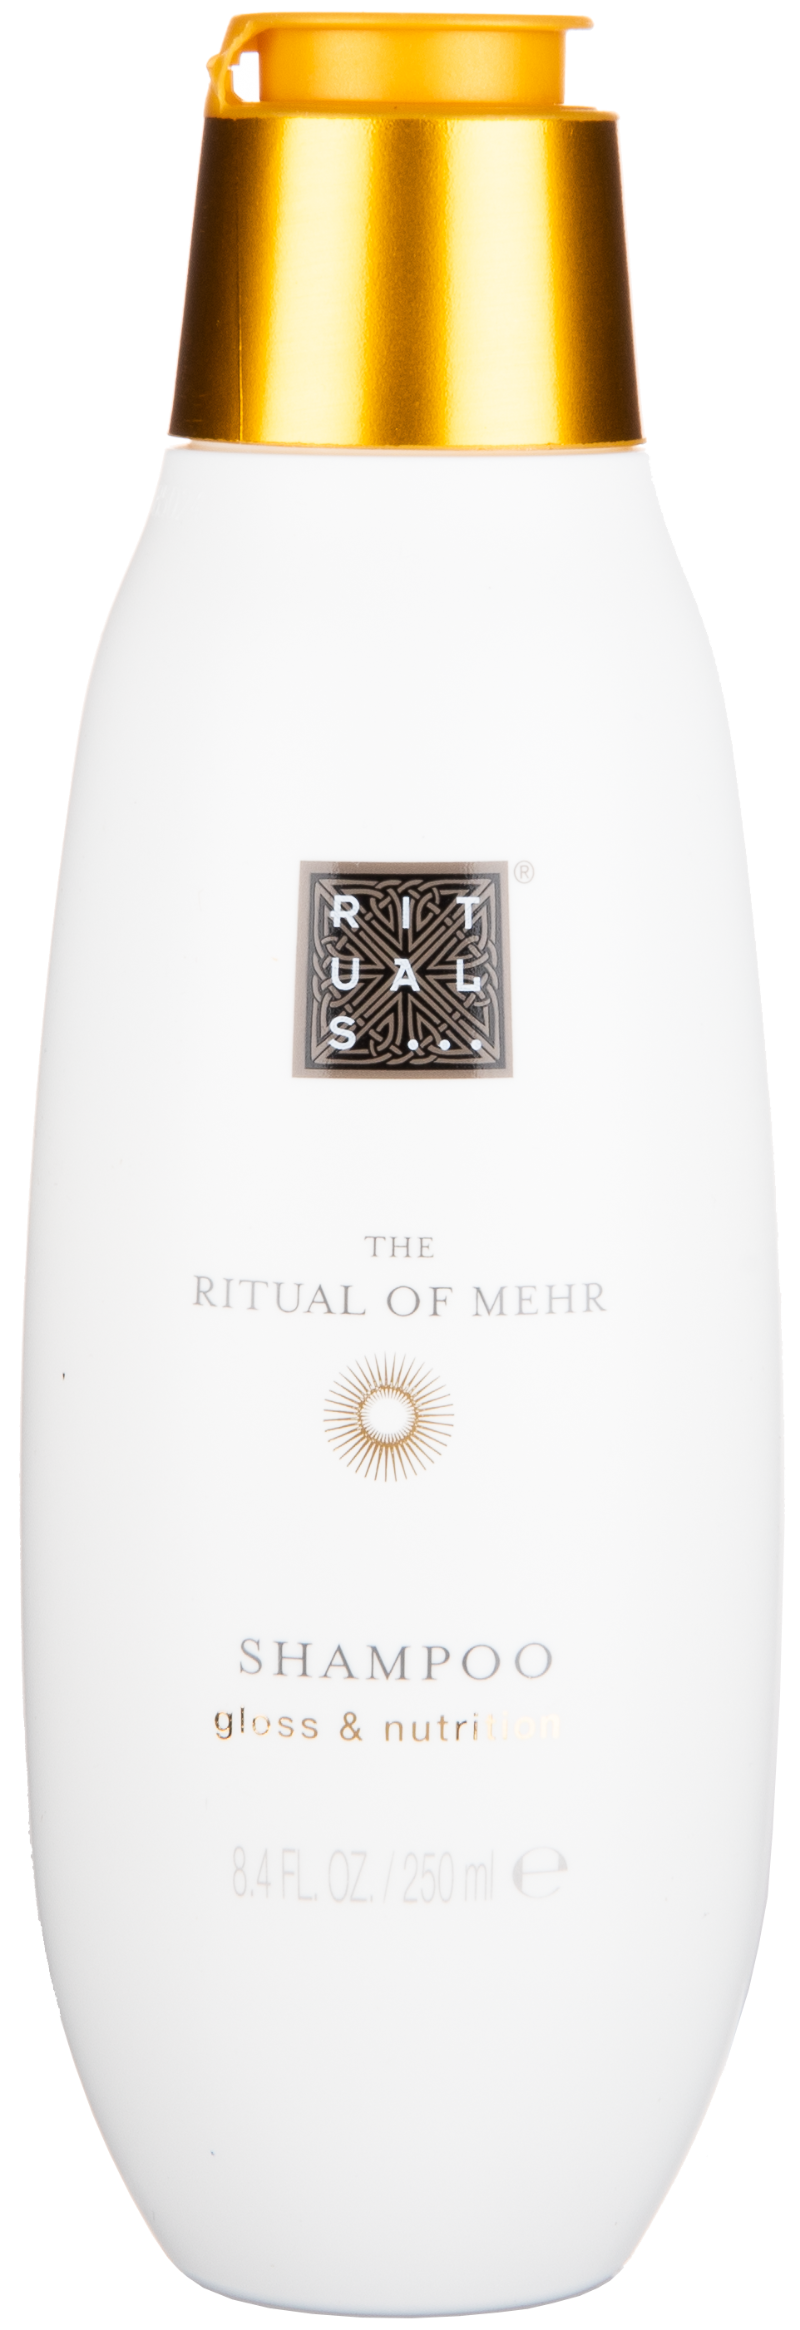 Rituals - The Ritual of Mehr Shampoo 250 ml